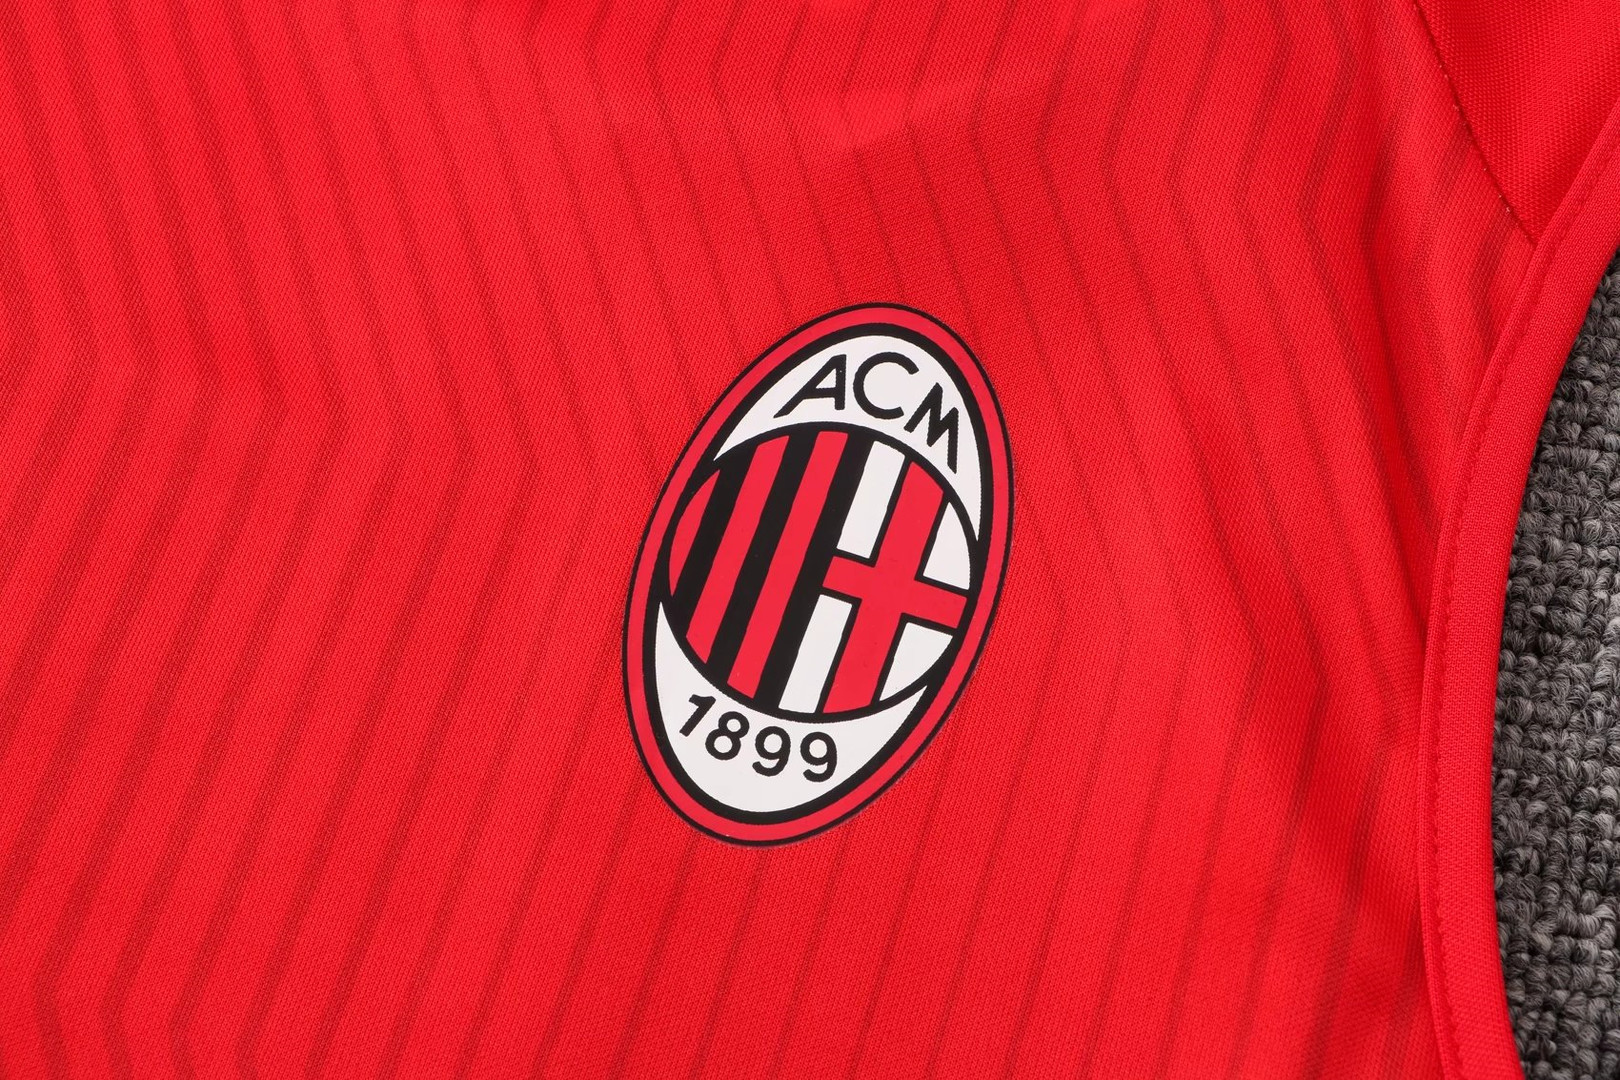 21/22 AC Milan Red Soccer Singlet Jersey Mens